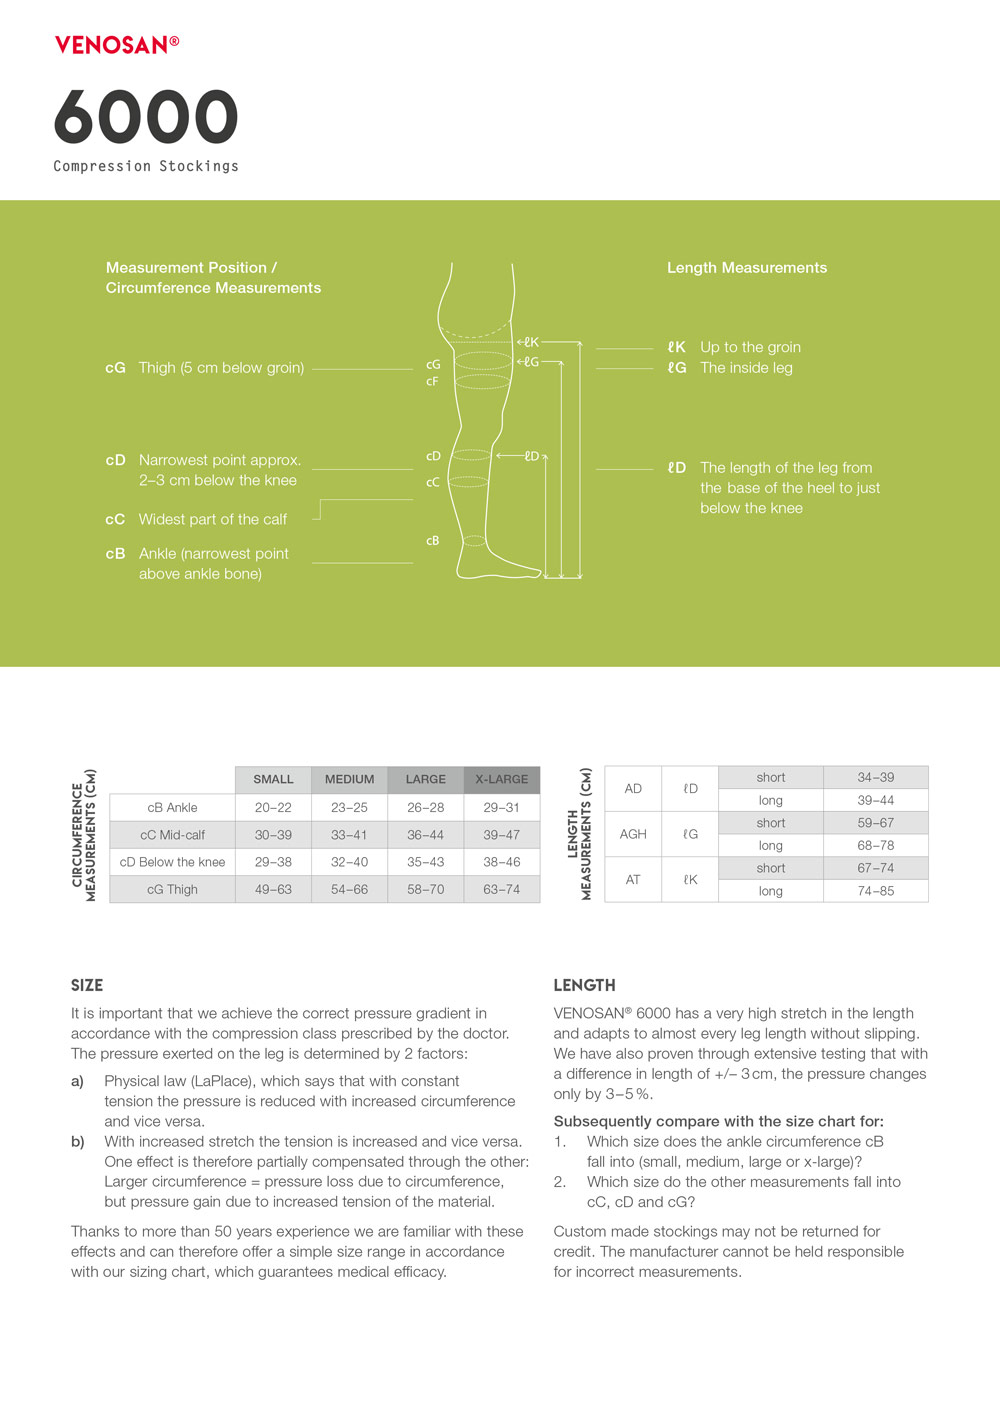 Venosan-6000-series-size-guide-compression-stockings